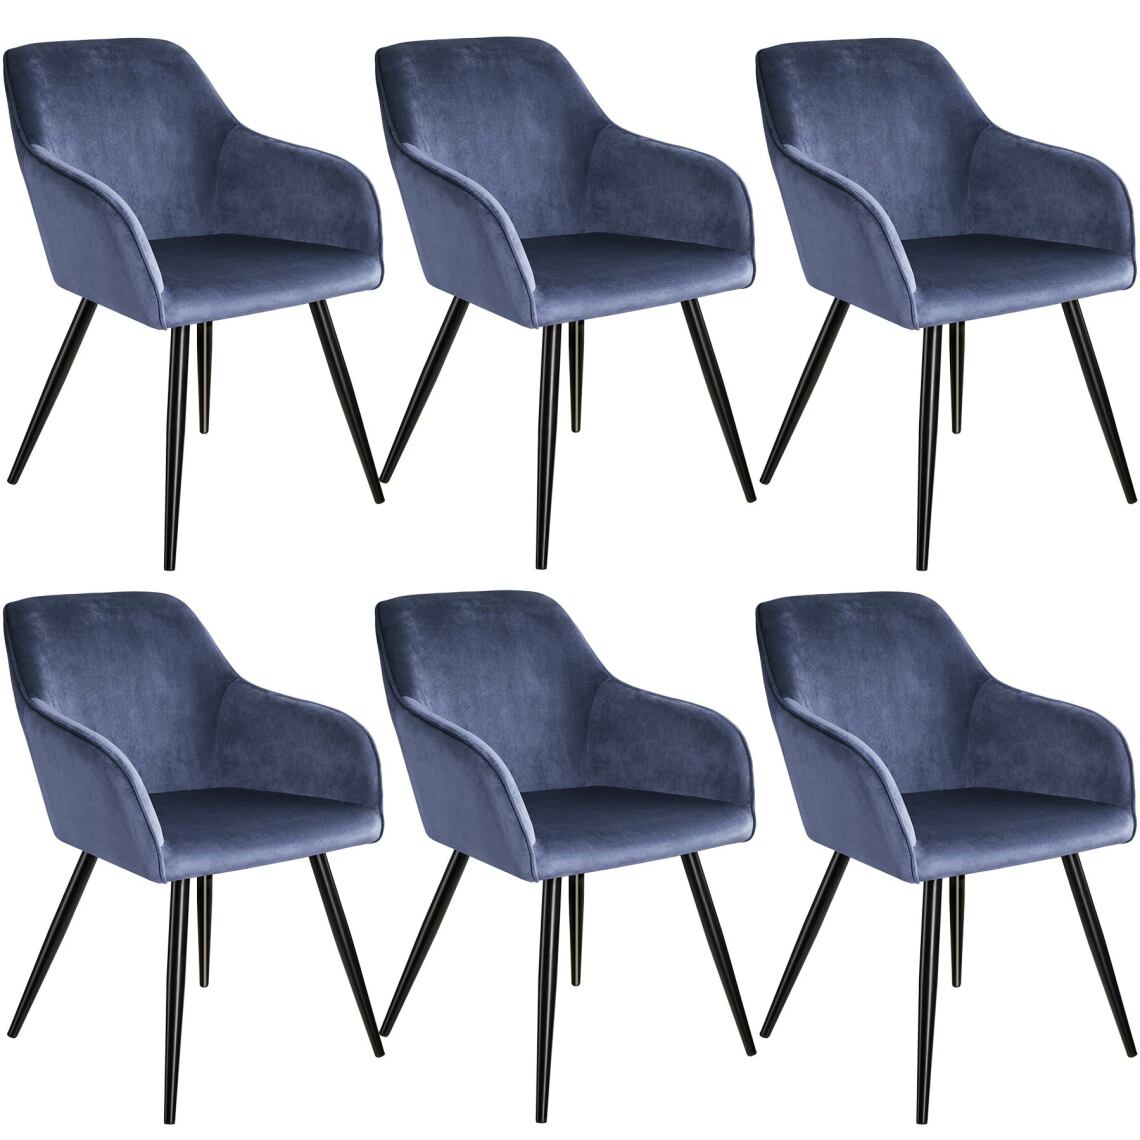 Tectake - 6 Chaises MARILYN Design en Velours Style Scandinave - bleu/noir - Chaises